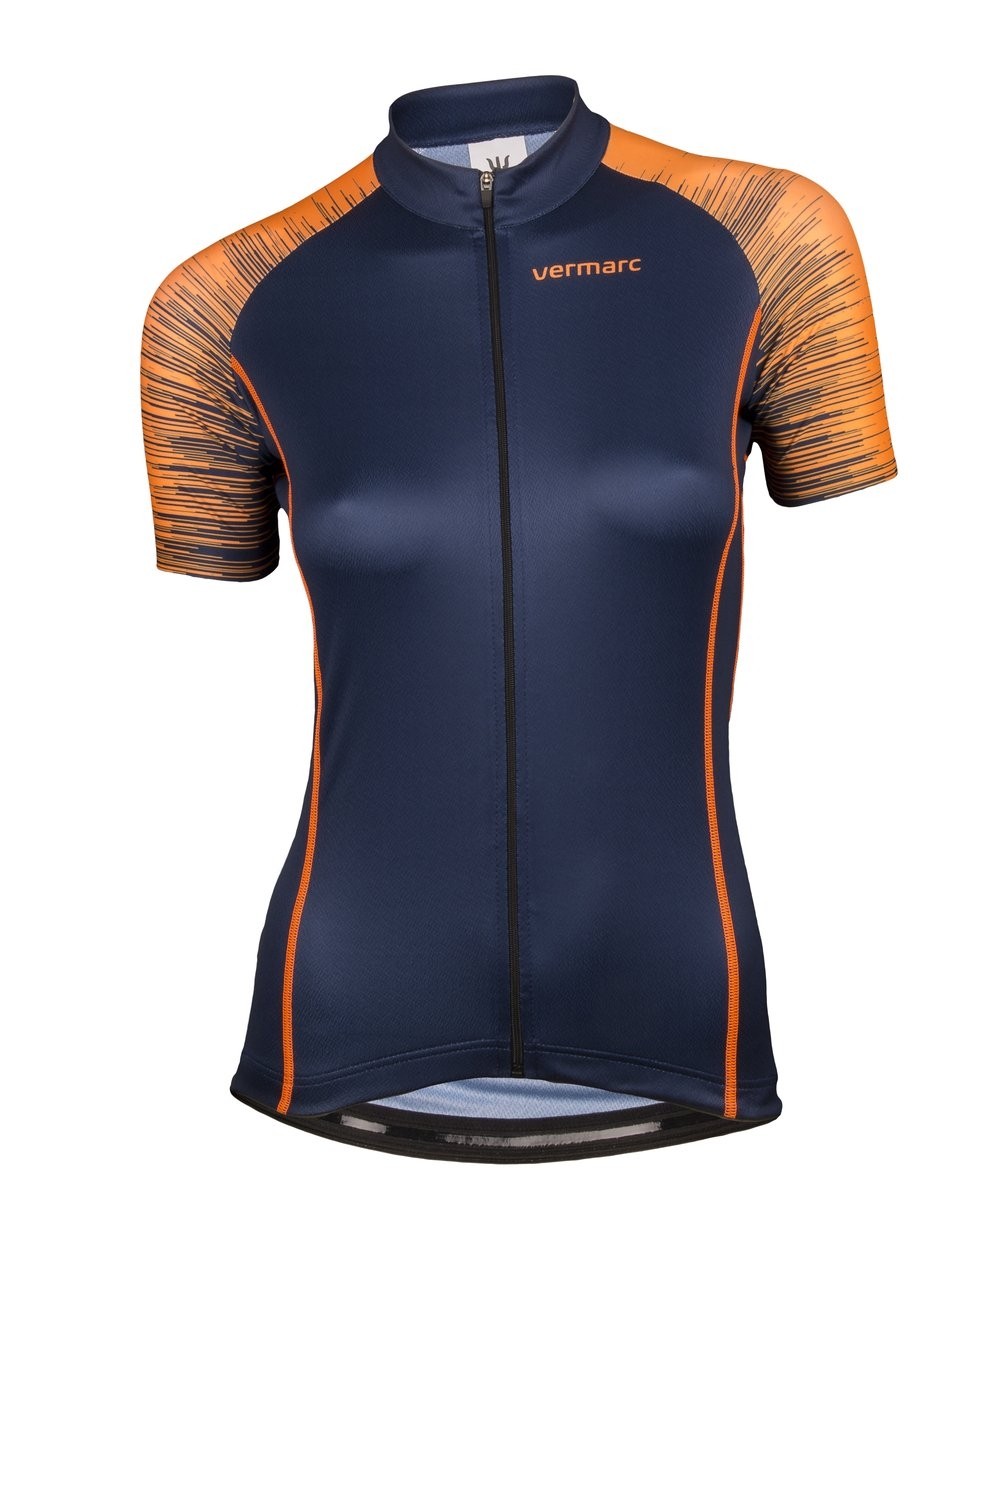 Vermarc seiso sp.l aero maillot de cyclisme manches courtes femme navy bleu fluo orange